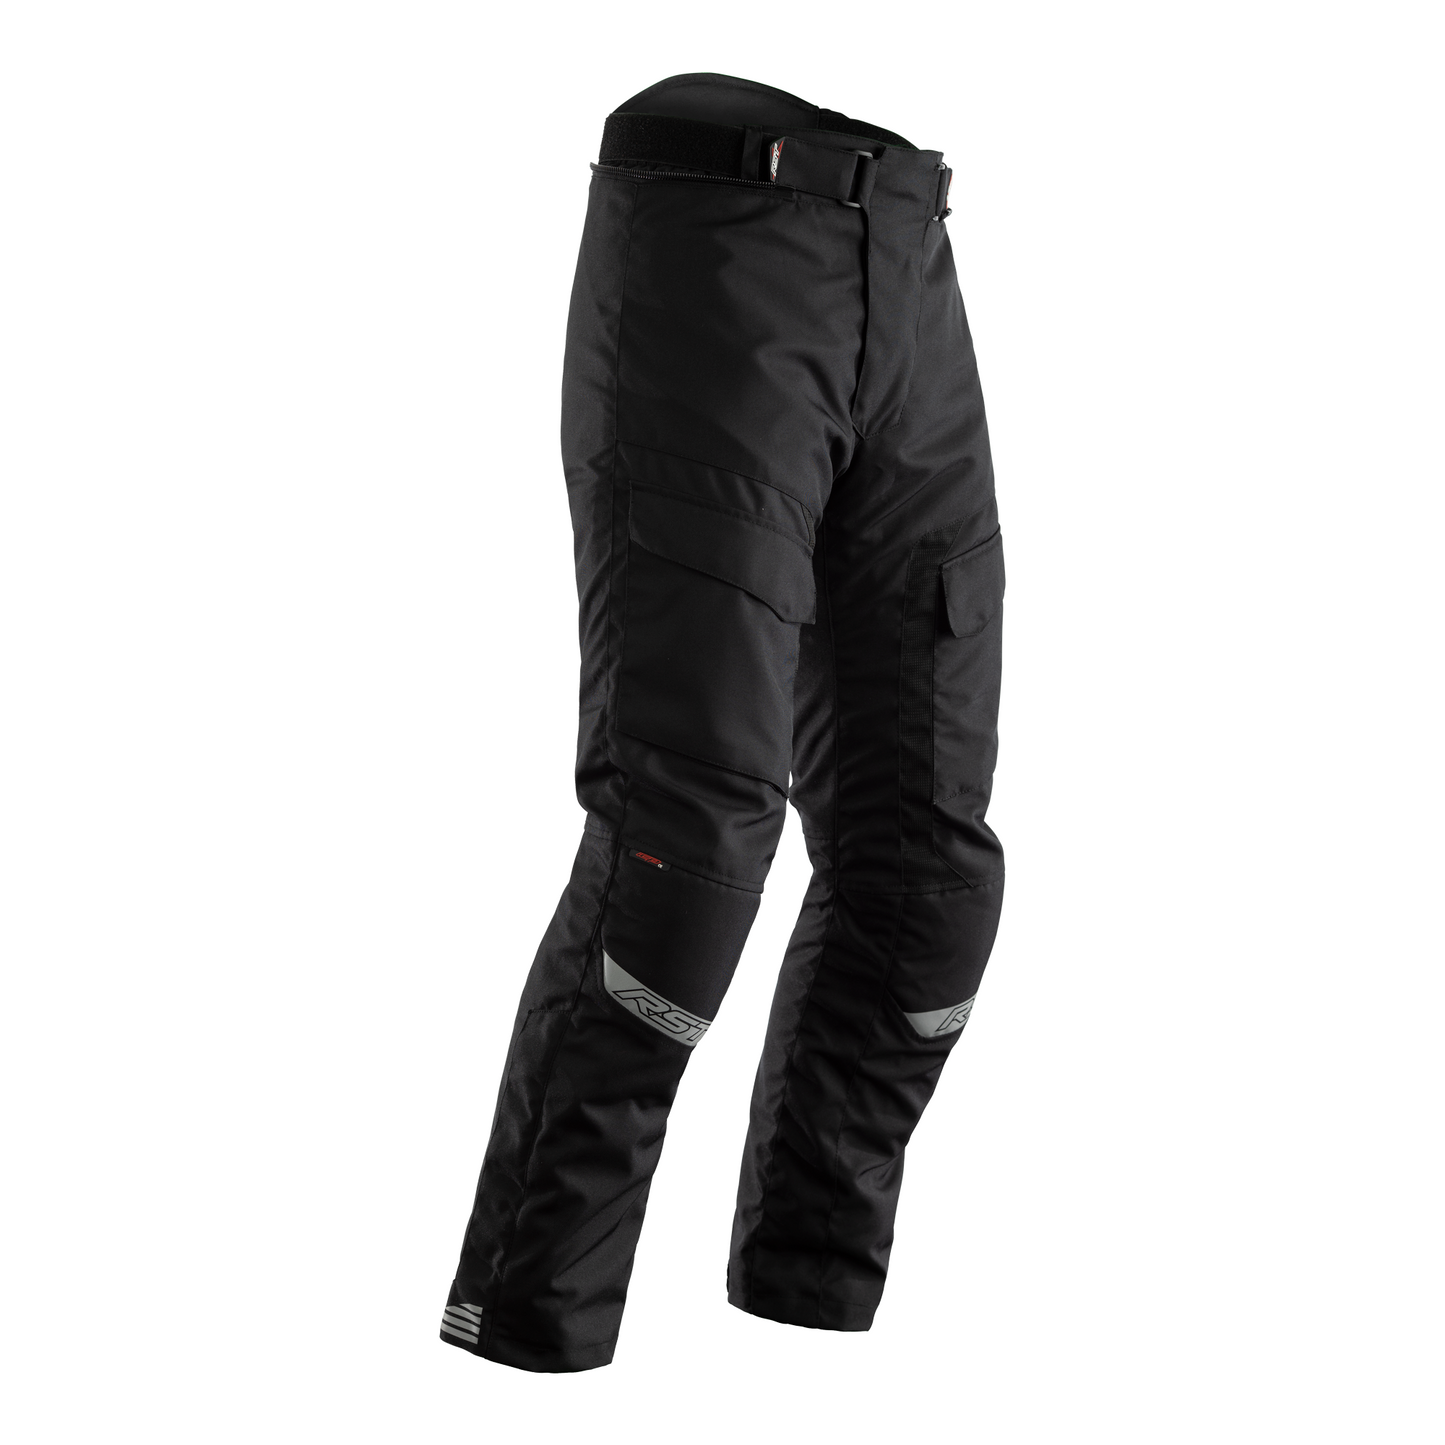 RST Alpha 4 IV (CE) Men's Textile Riding - Regular Length - Jean - Black